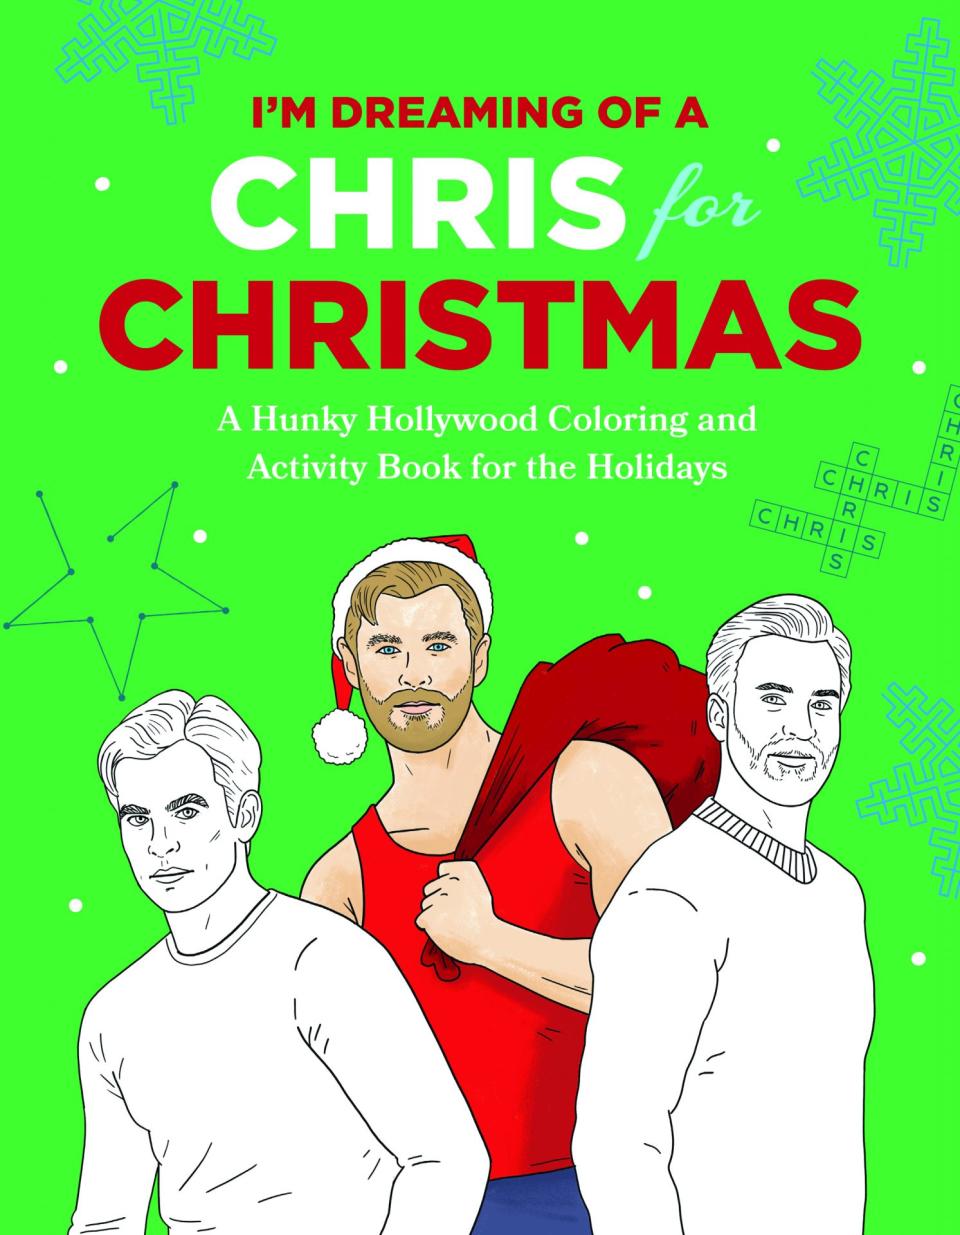 I'm Dreaming of a Chris for Christmas cover art of Hollywood Chris-es: Chris Pine, Chris Hemsworth, and Chris Evans